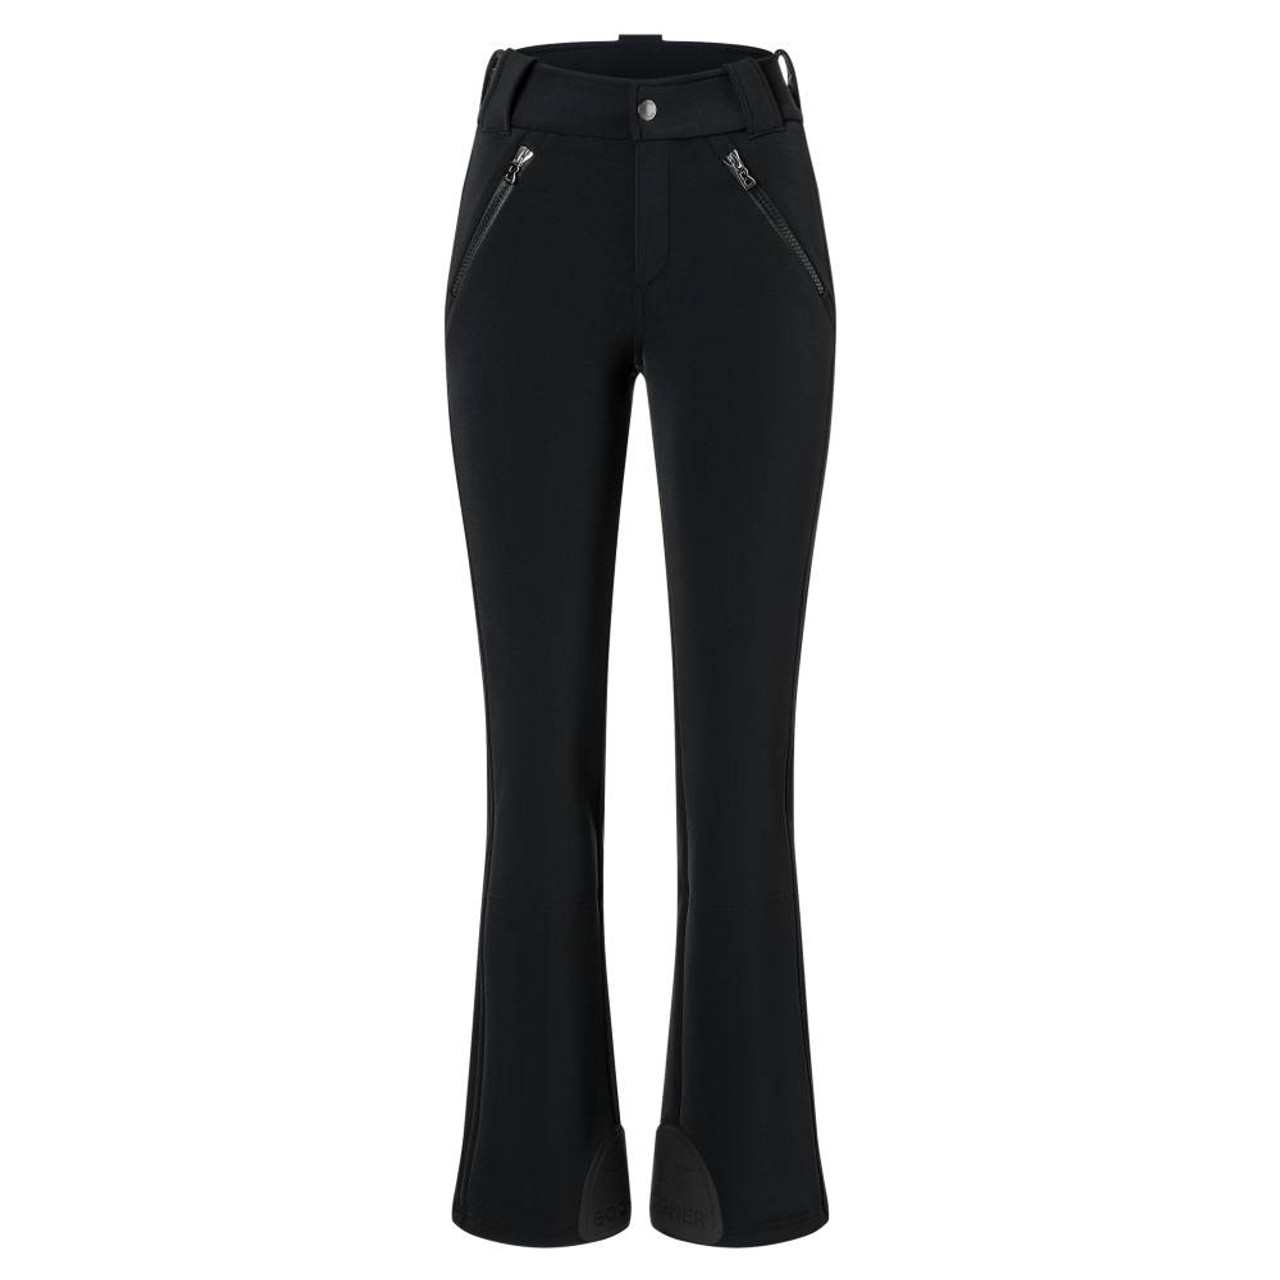 Bogner Haze Women's Ski Trousers Orange Black Size 34 XS New with